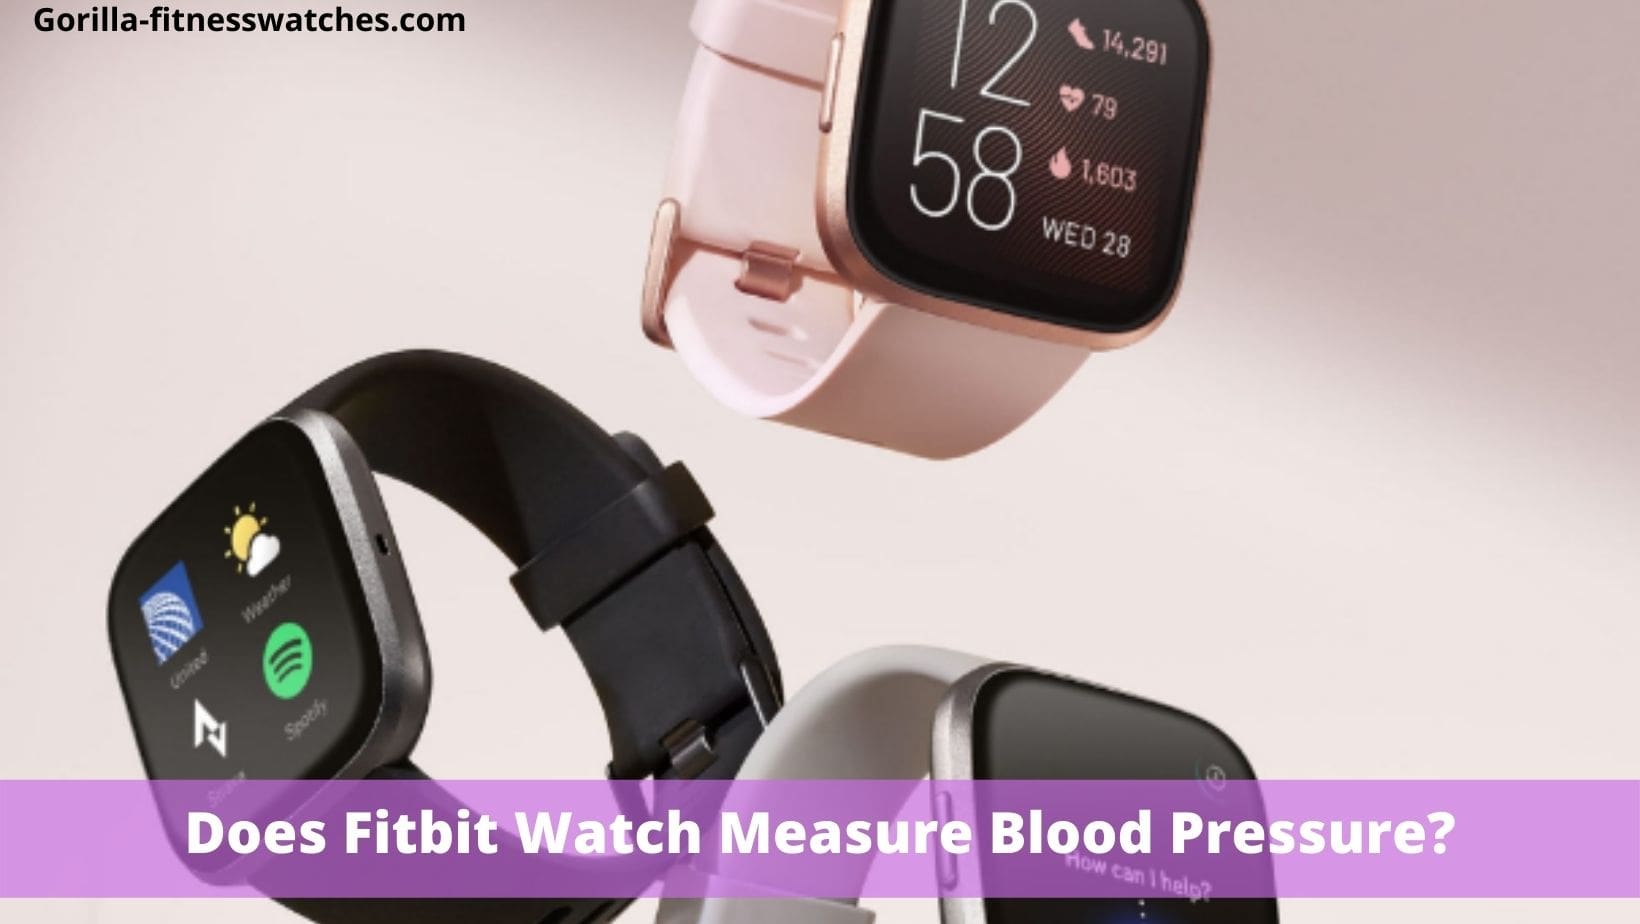 Does Fitbit Watch Measure Blood Pressure?